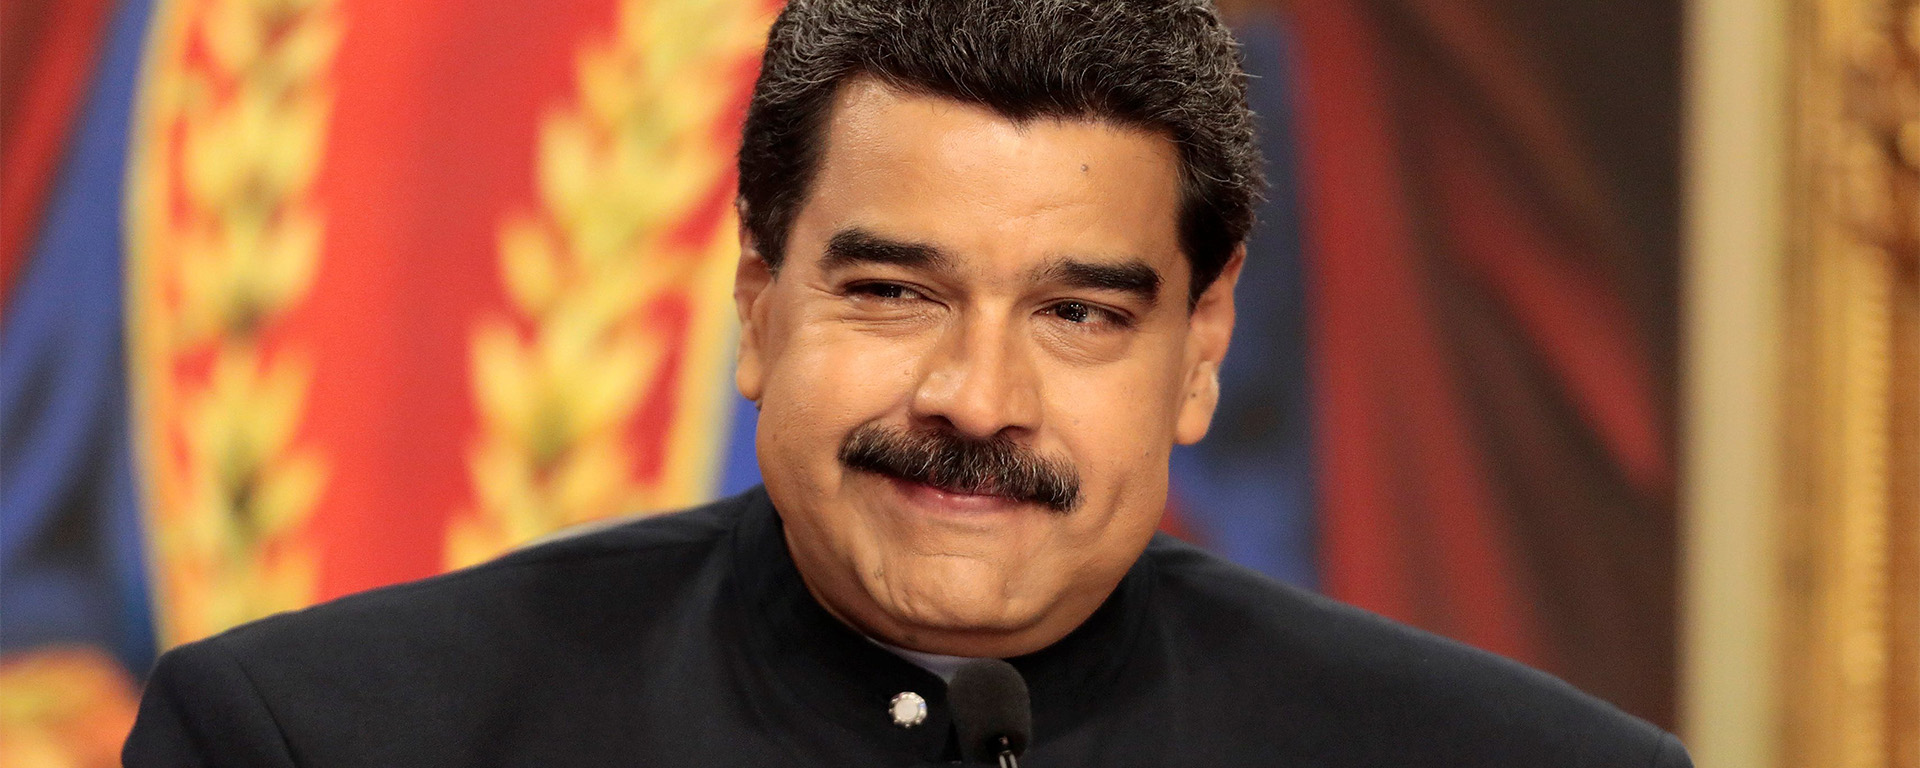 Мадуро. Президентвенесуэллы Мадура. Николас Мадуро. Президент Венесуэлы Мадуро. Фото президента Венесуэлы Николас Мадуро.